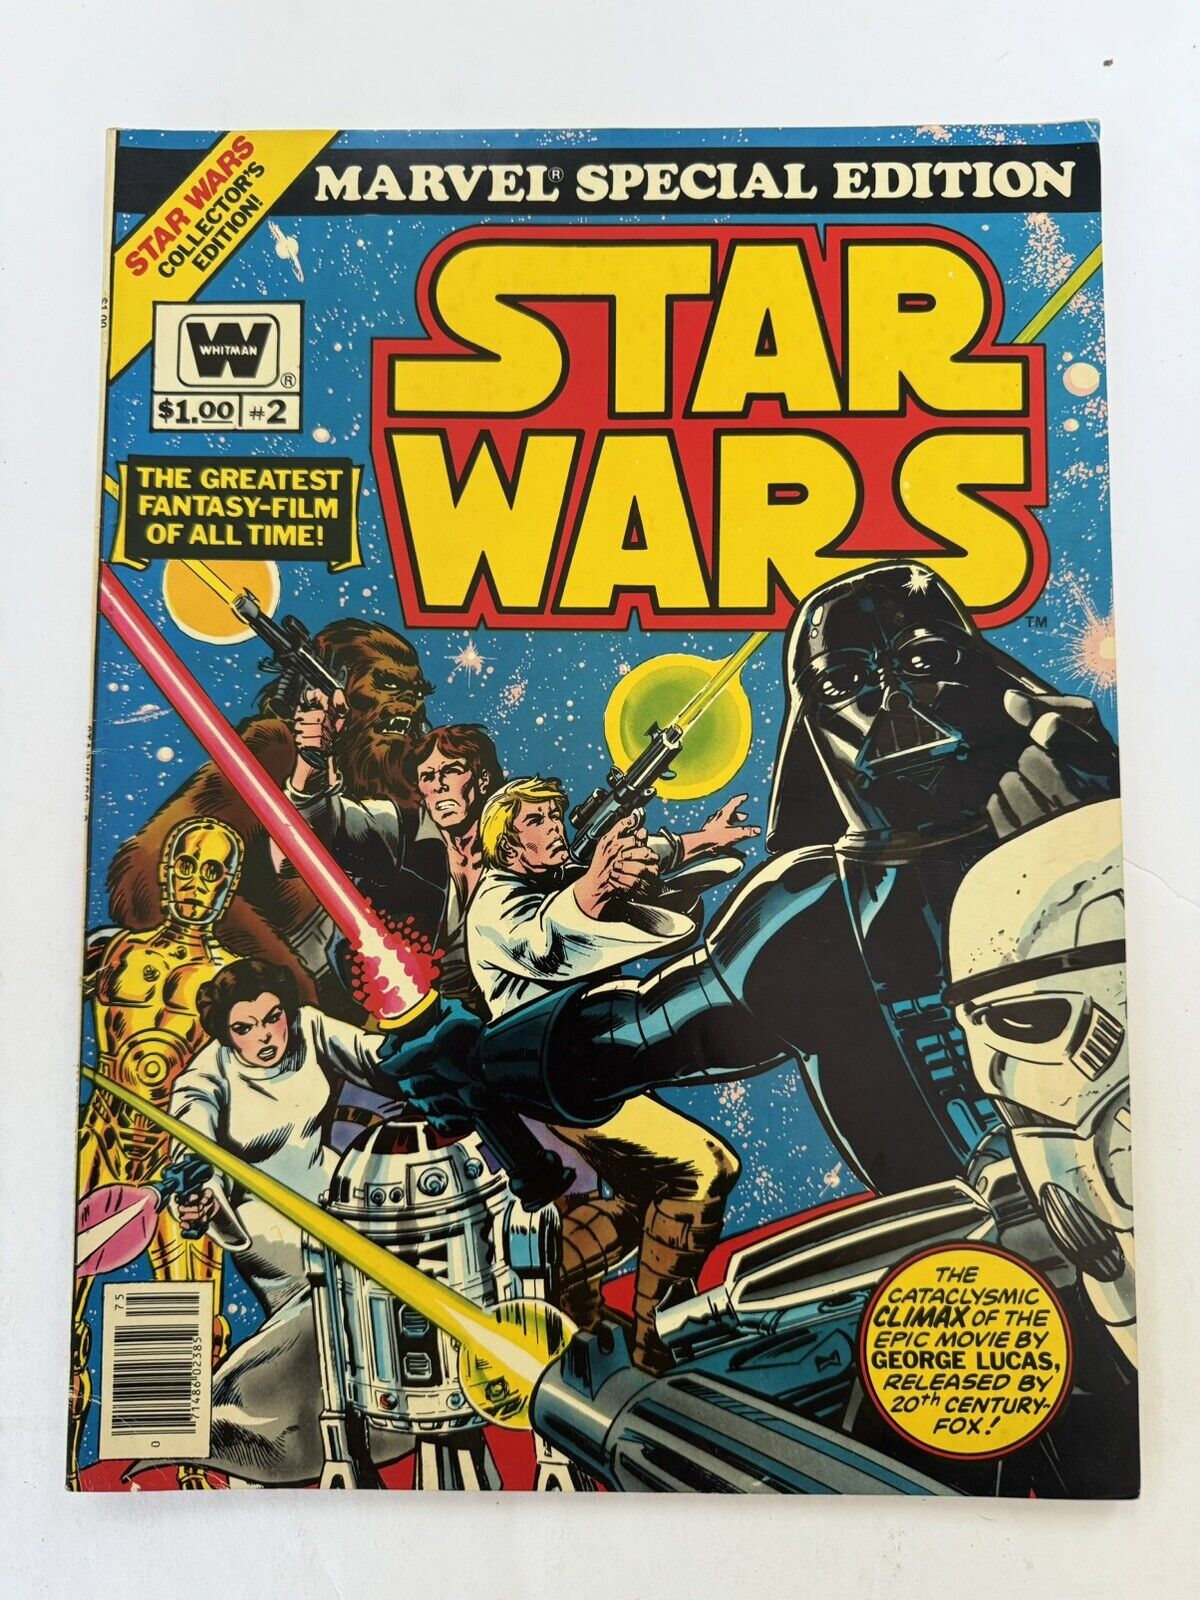 VTG 1977 MARVEL SPECIAL EDITION Issue featuring STAR WARS, Vol. 1 No. 2.